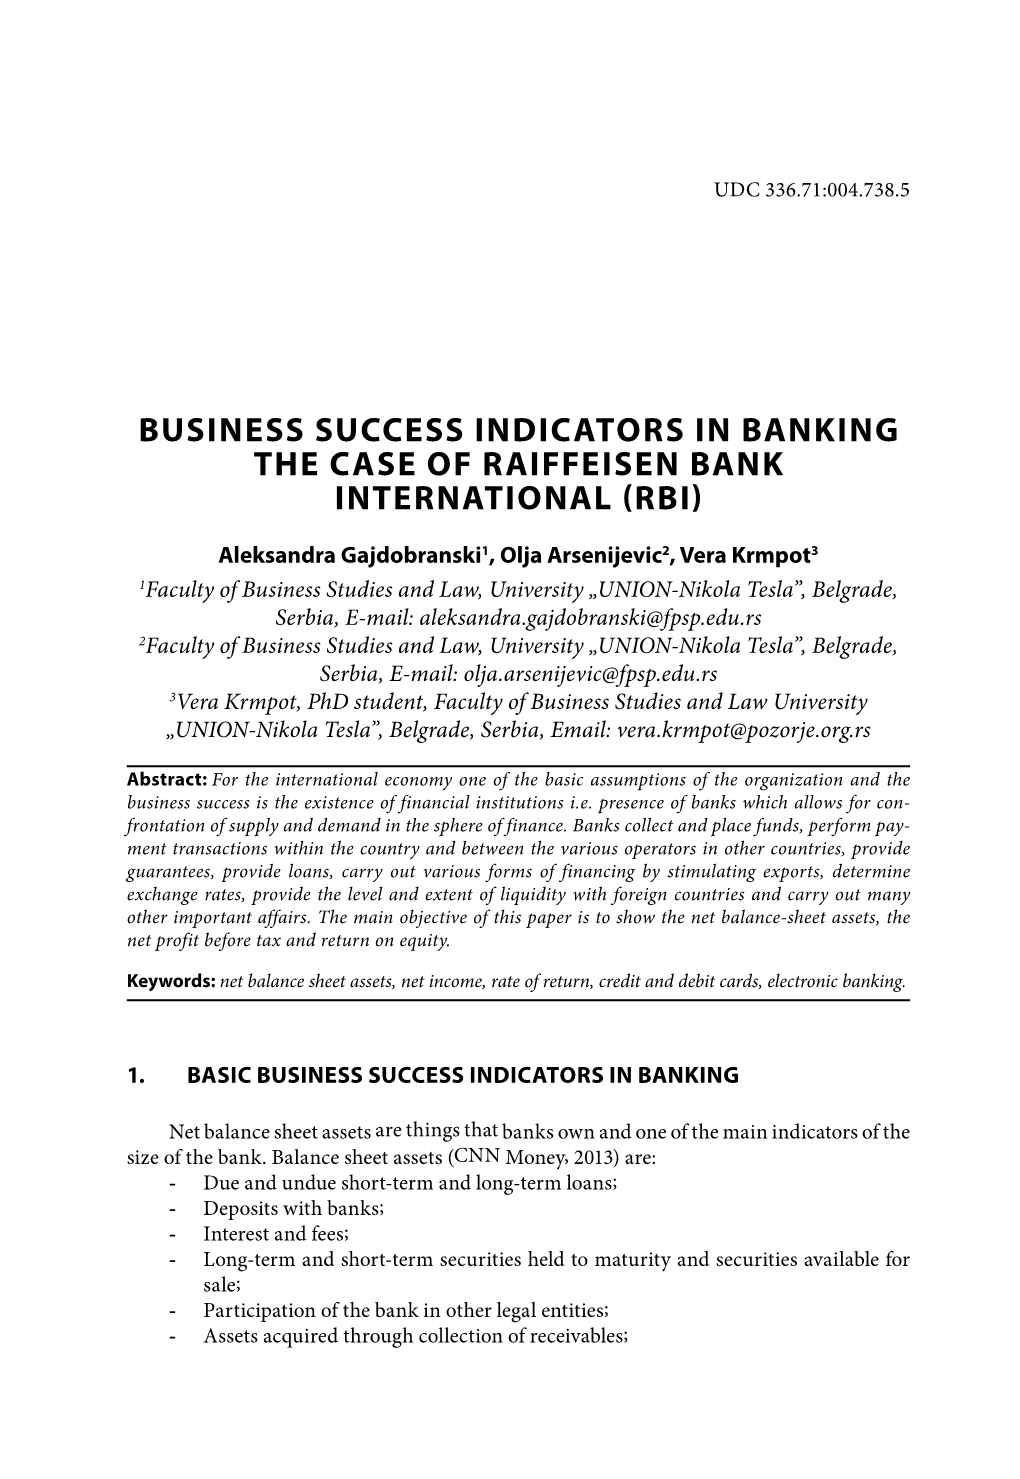 Business Success Indicators in Banking the Case of Raiffeisen Bank International Rbi